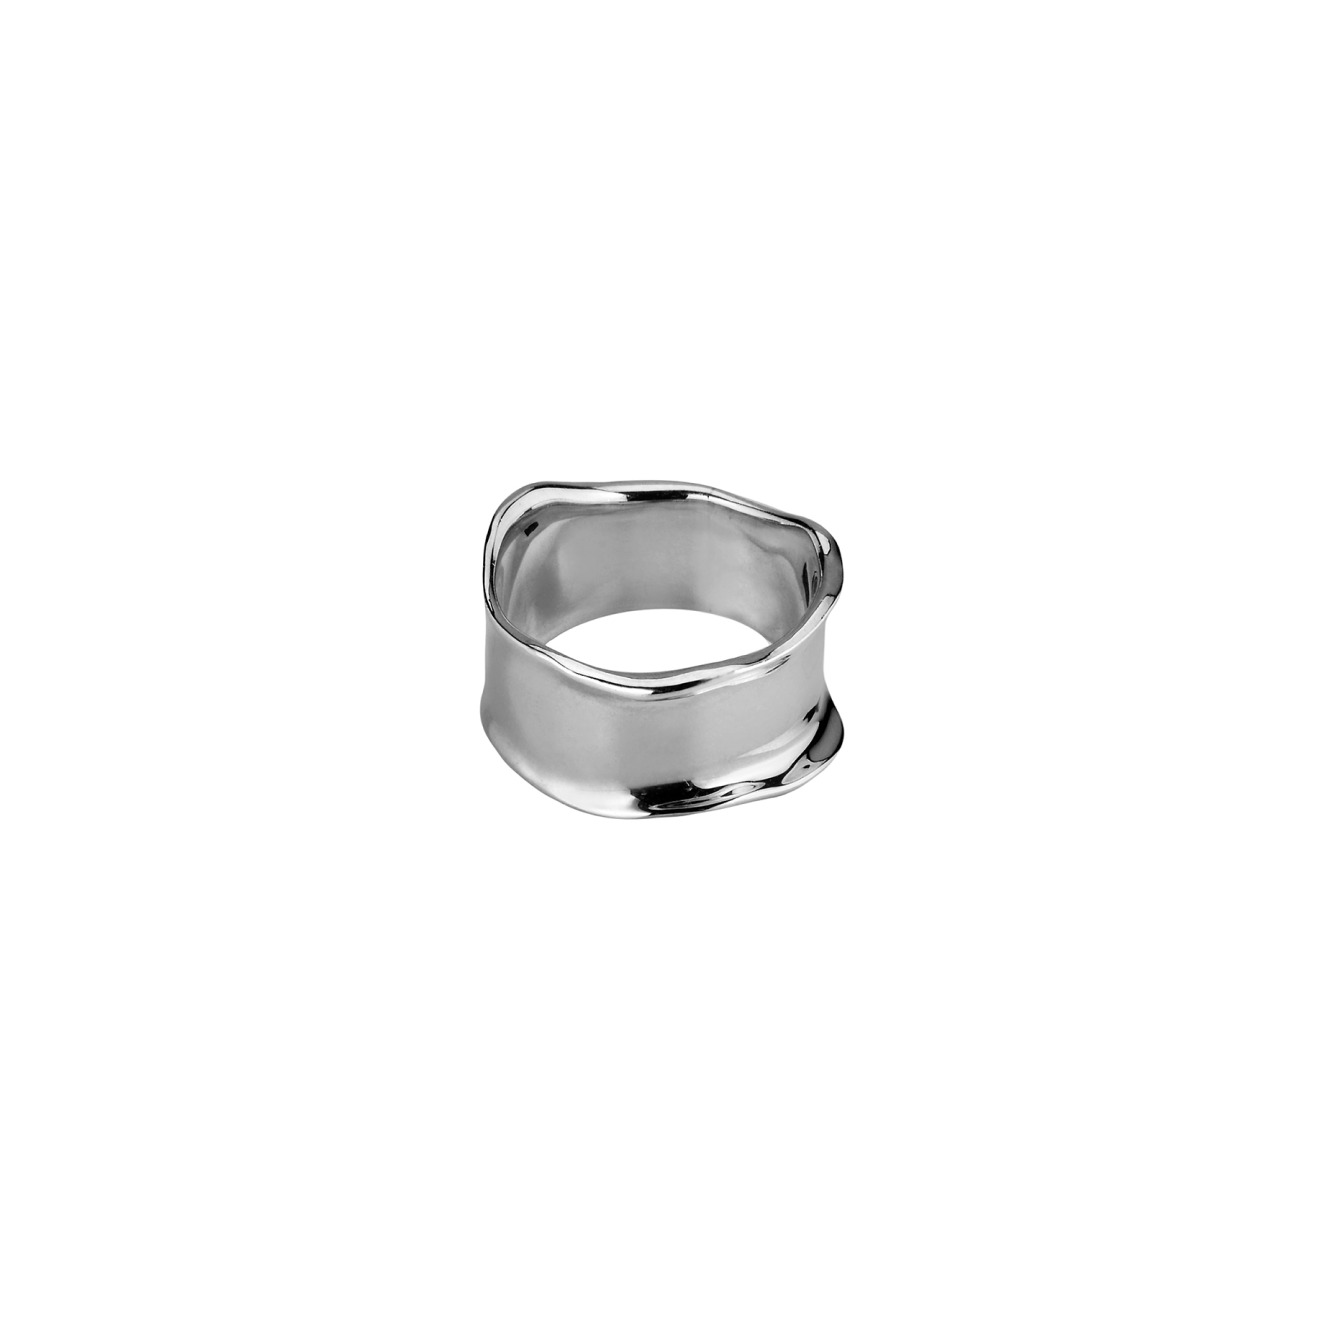 Ms. Marble Широкое кольцо из серебра Sixth Sense блюдо имперо серебро 925